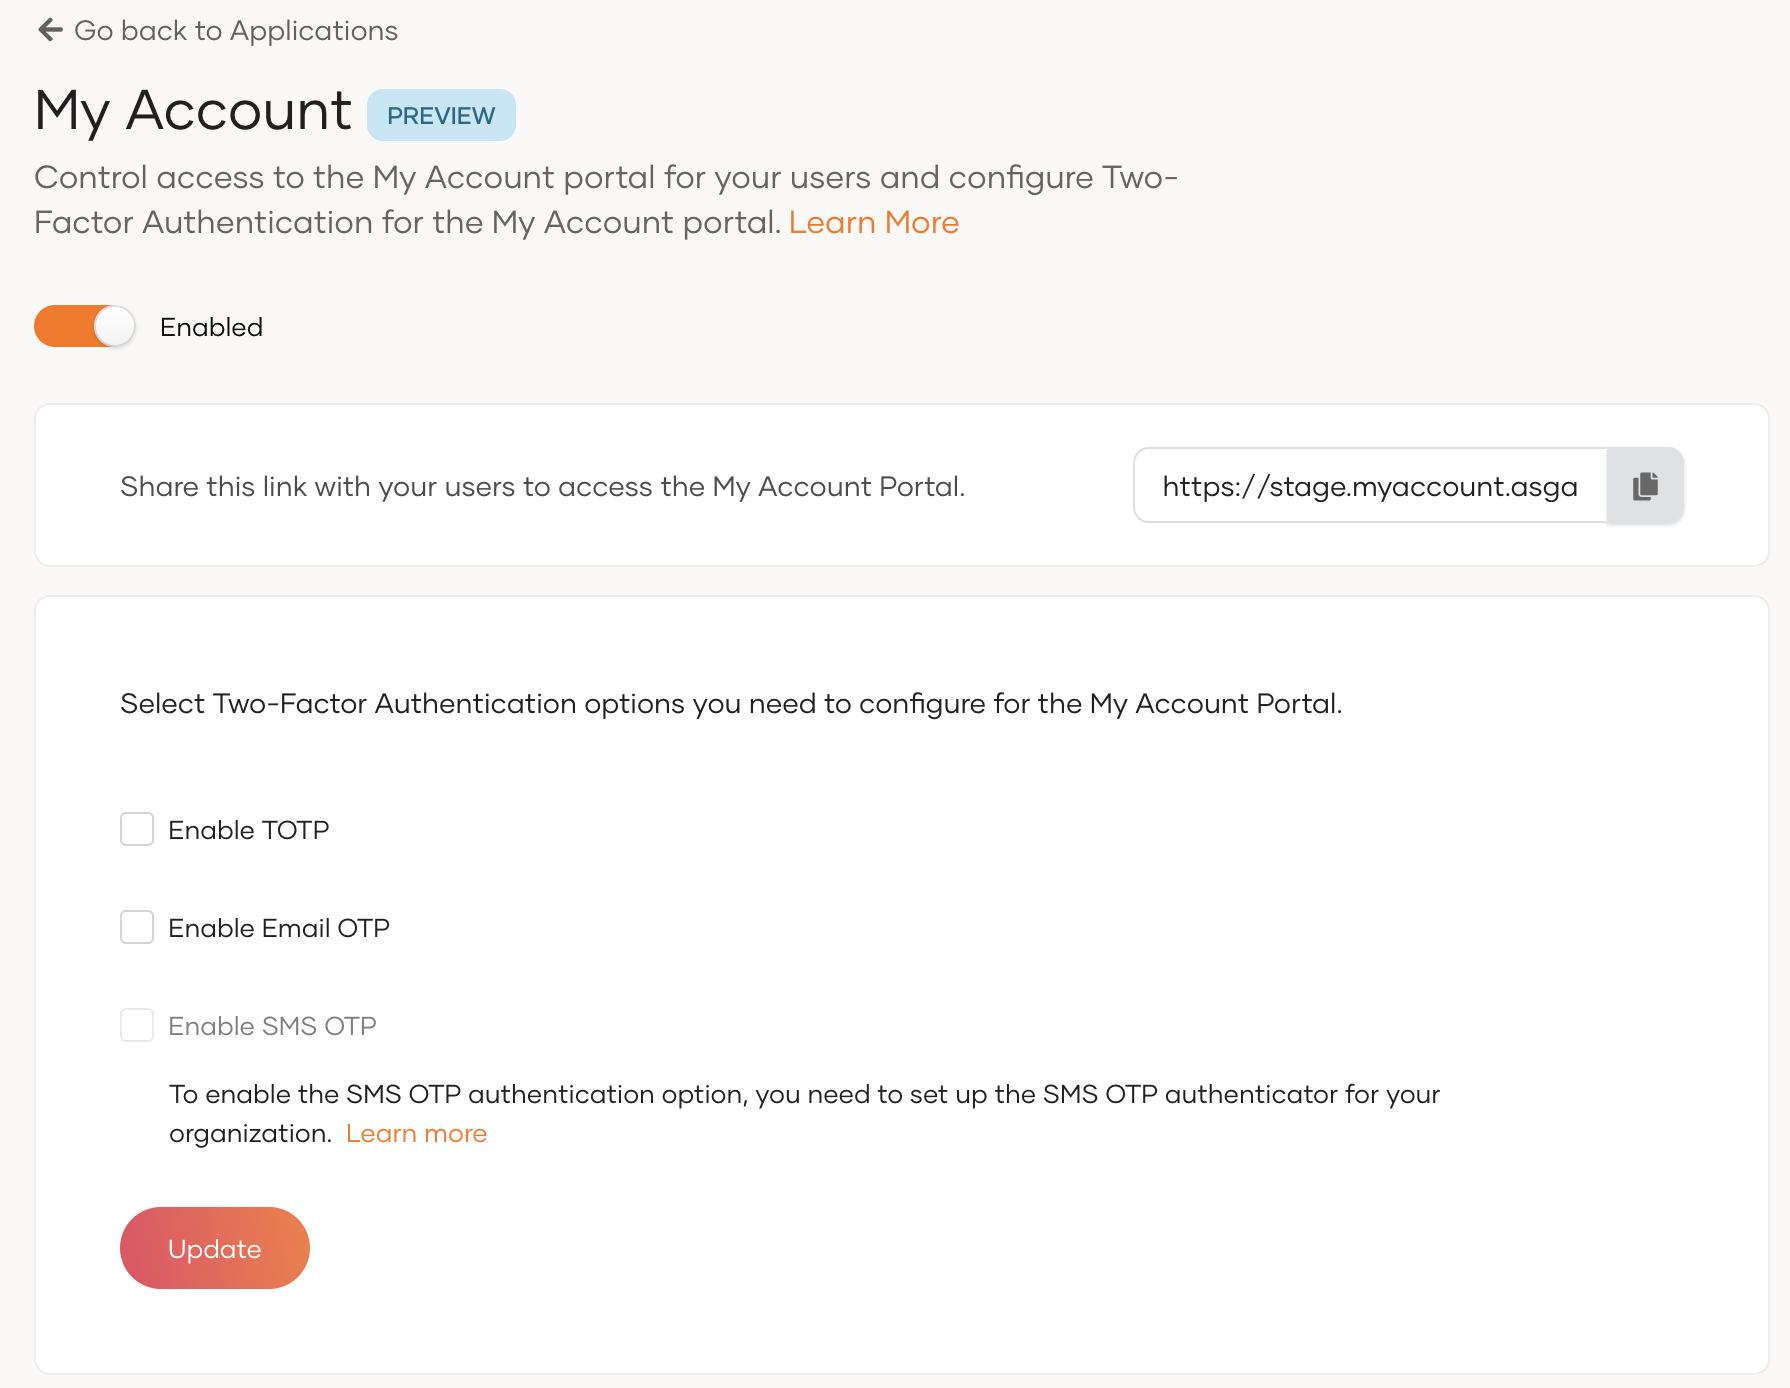 Configure 2FA options for My Account portal